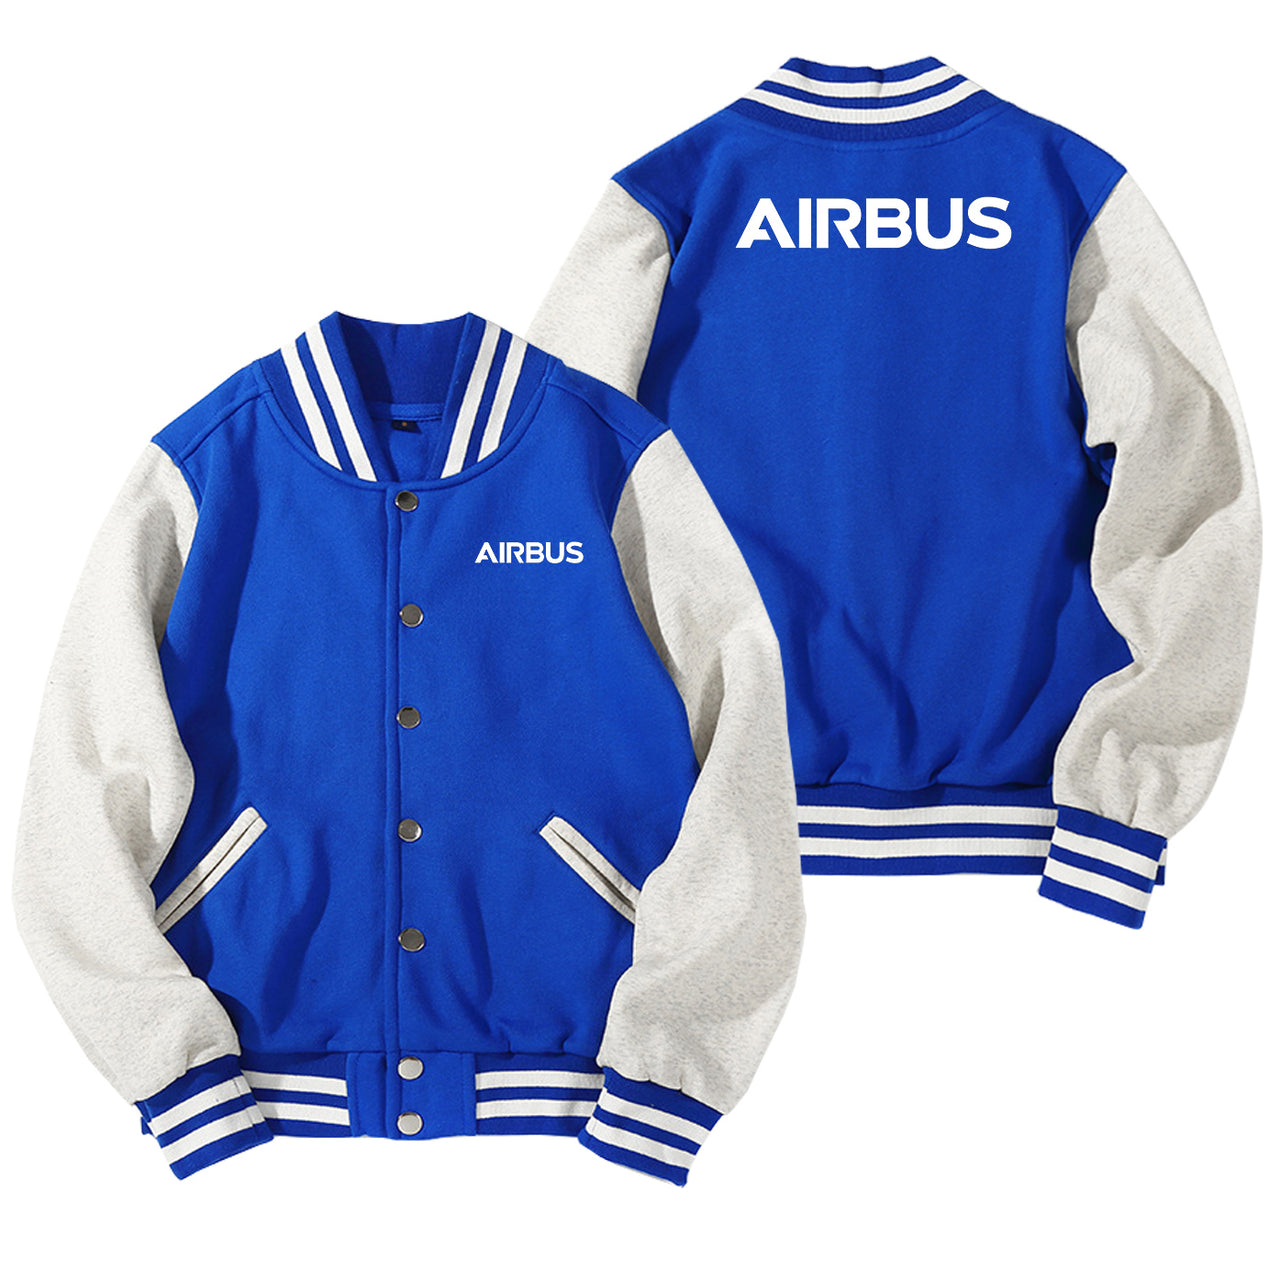 Airbus & Text Designed Baseball Style Jackets